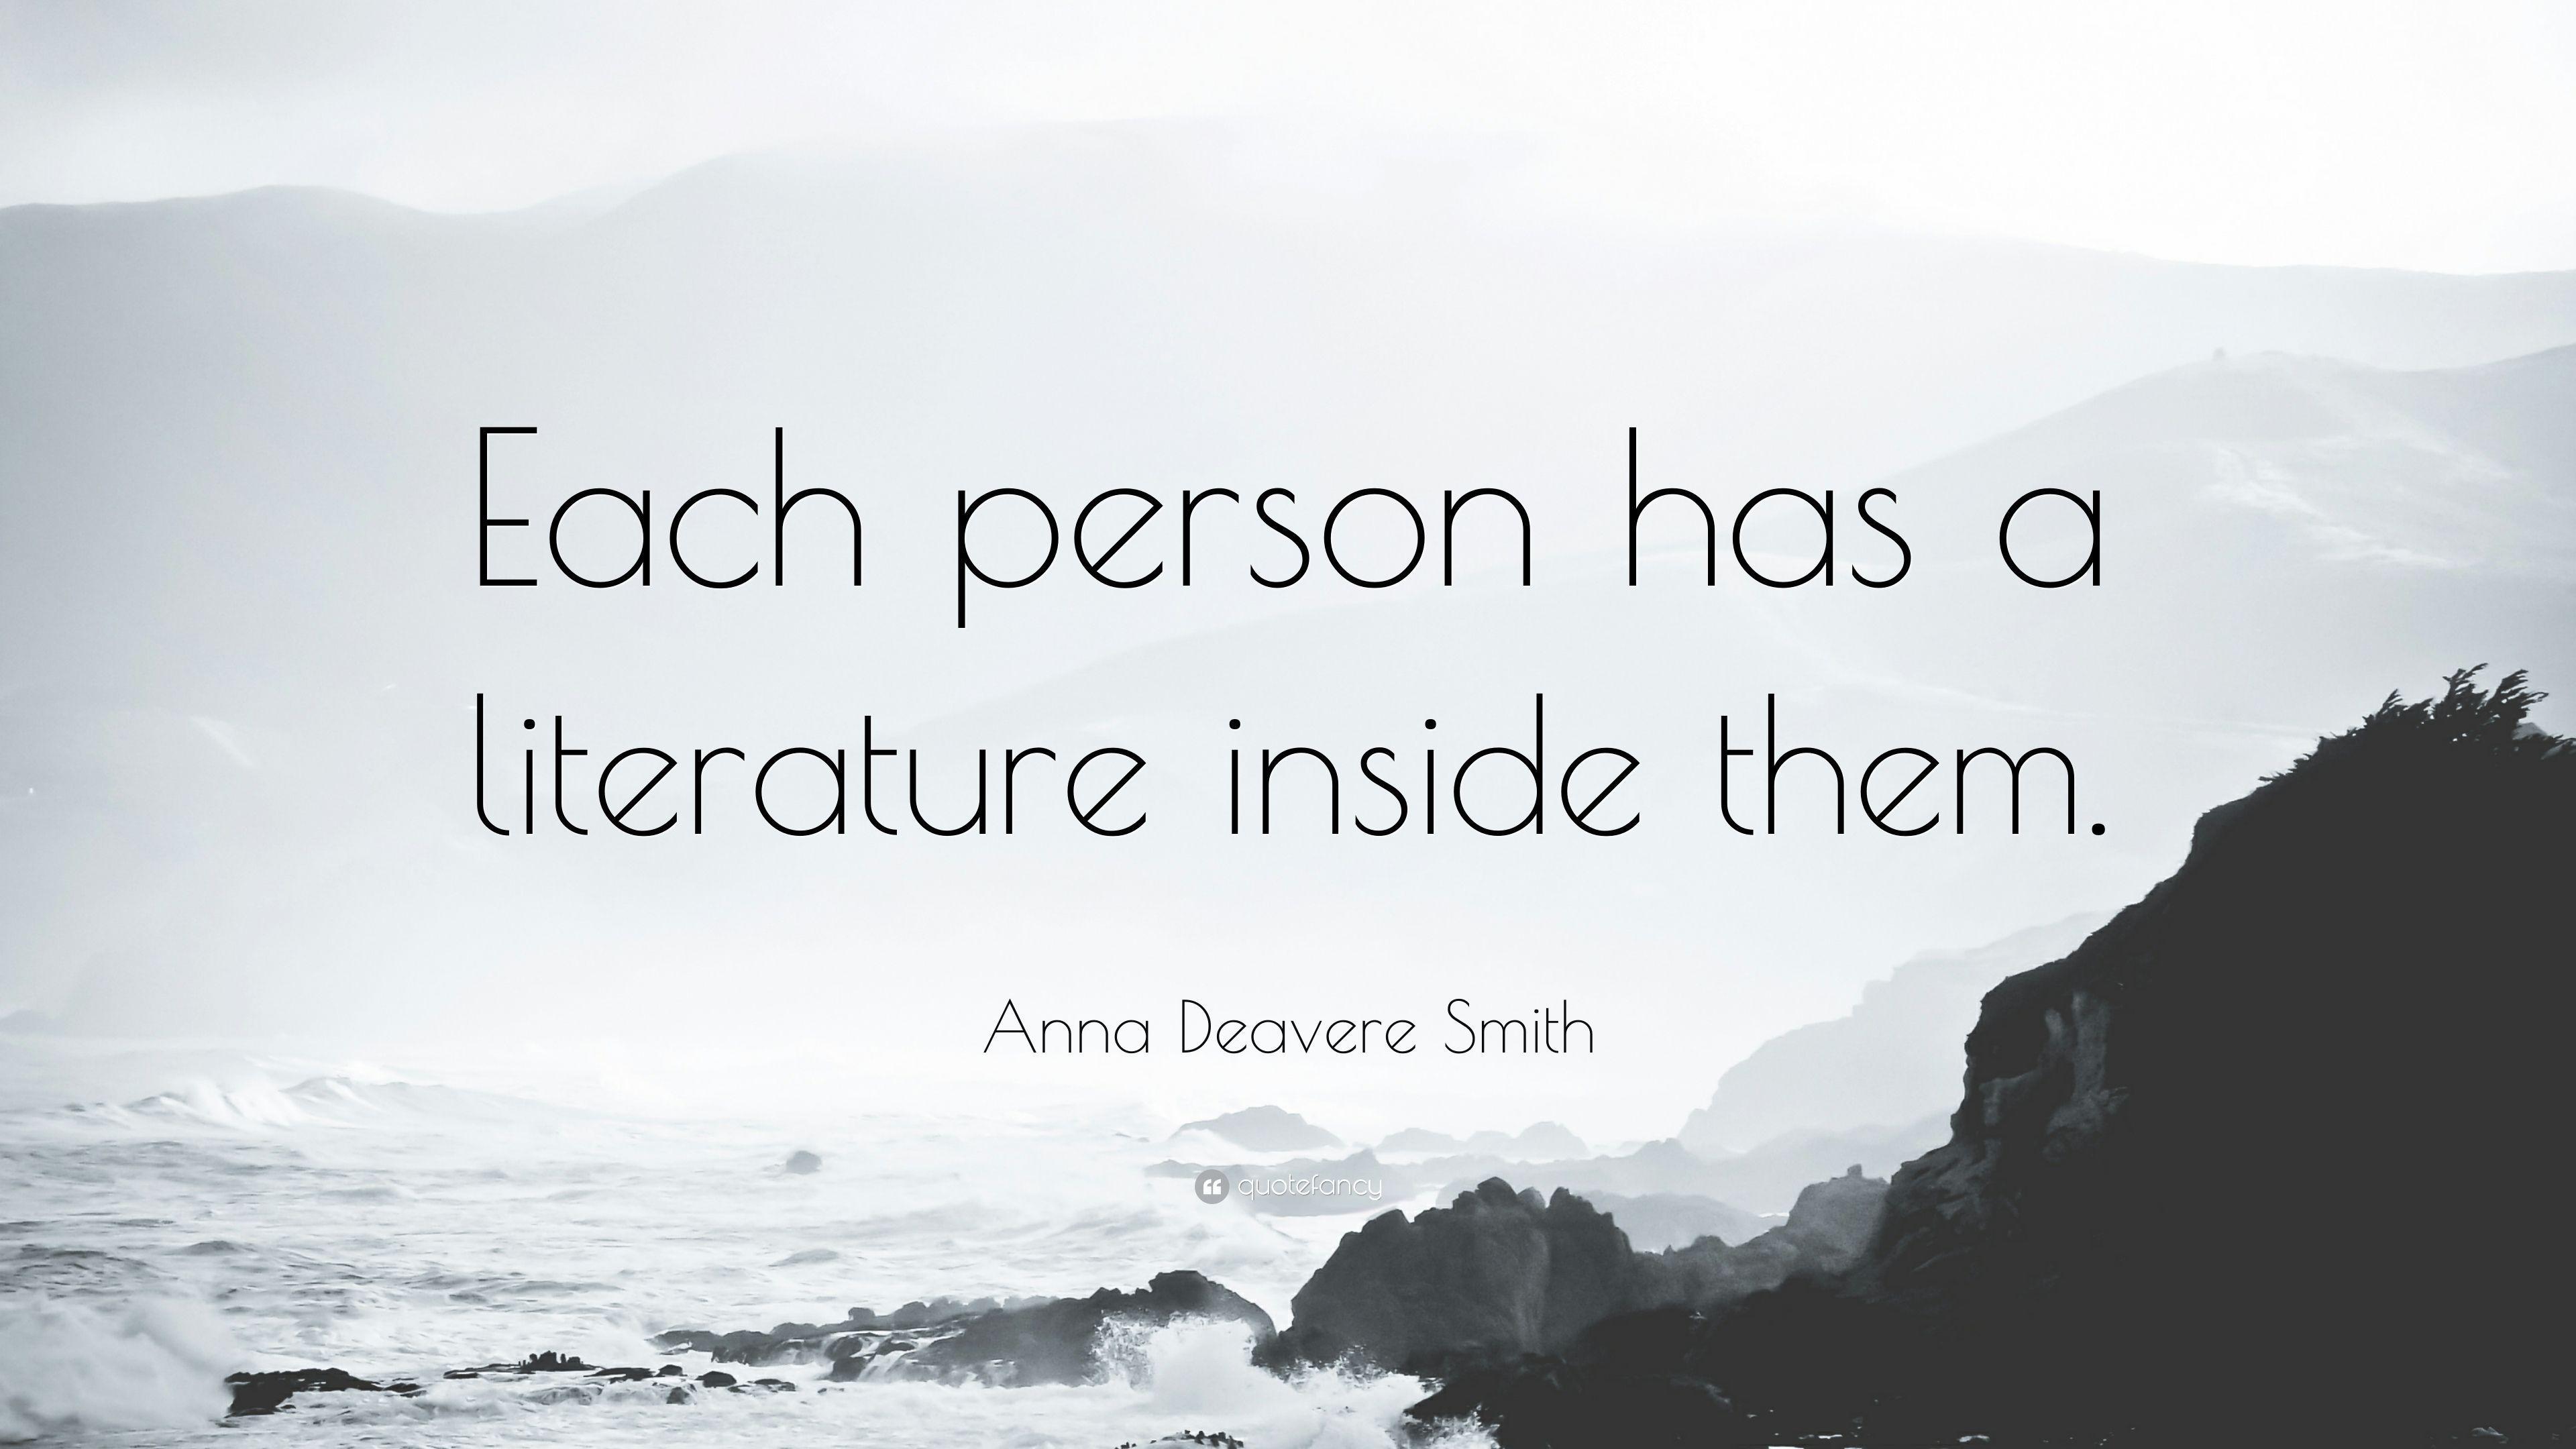 Anna Deavere Smith Quote: “Each person has a literature inside